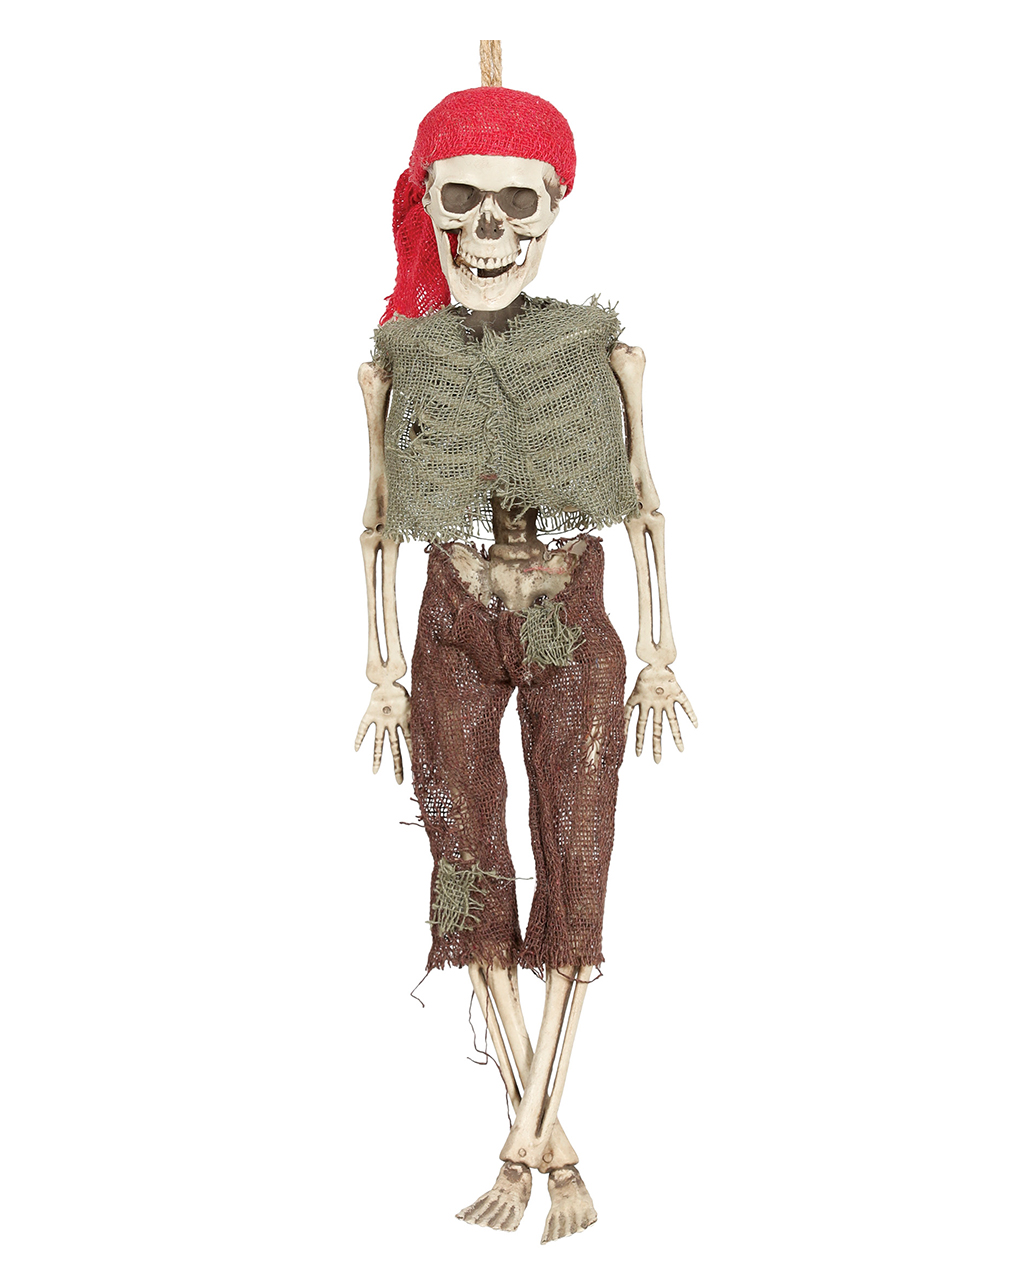 Skeleton Pirate Hanging Figure 40 Cm Pirate Deco